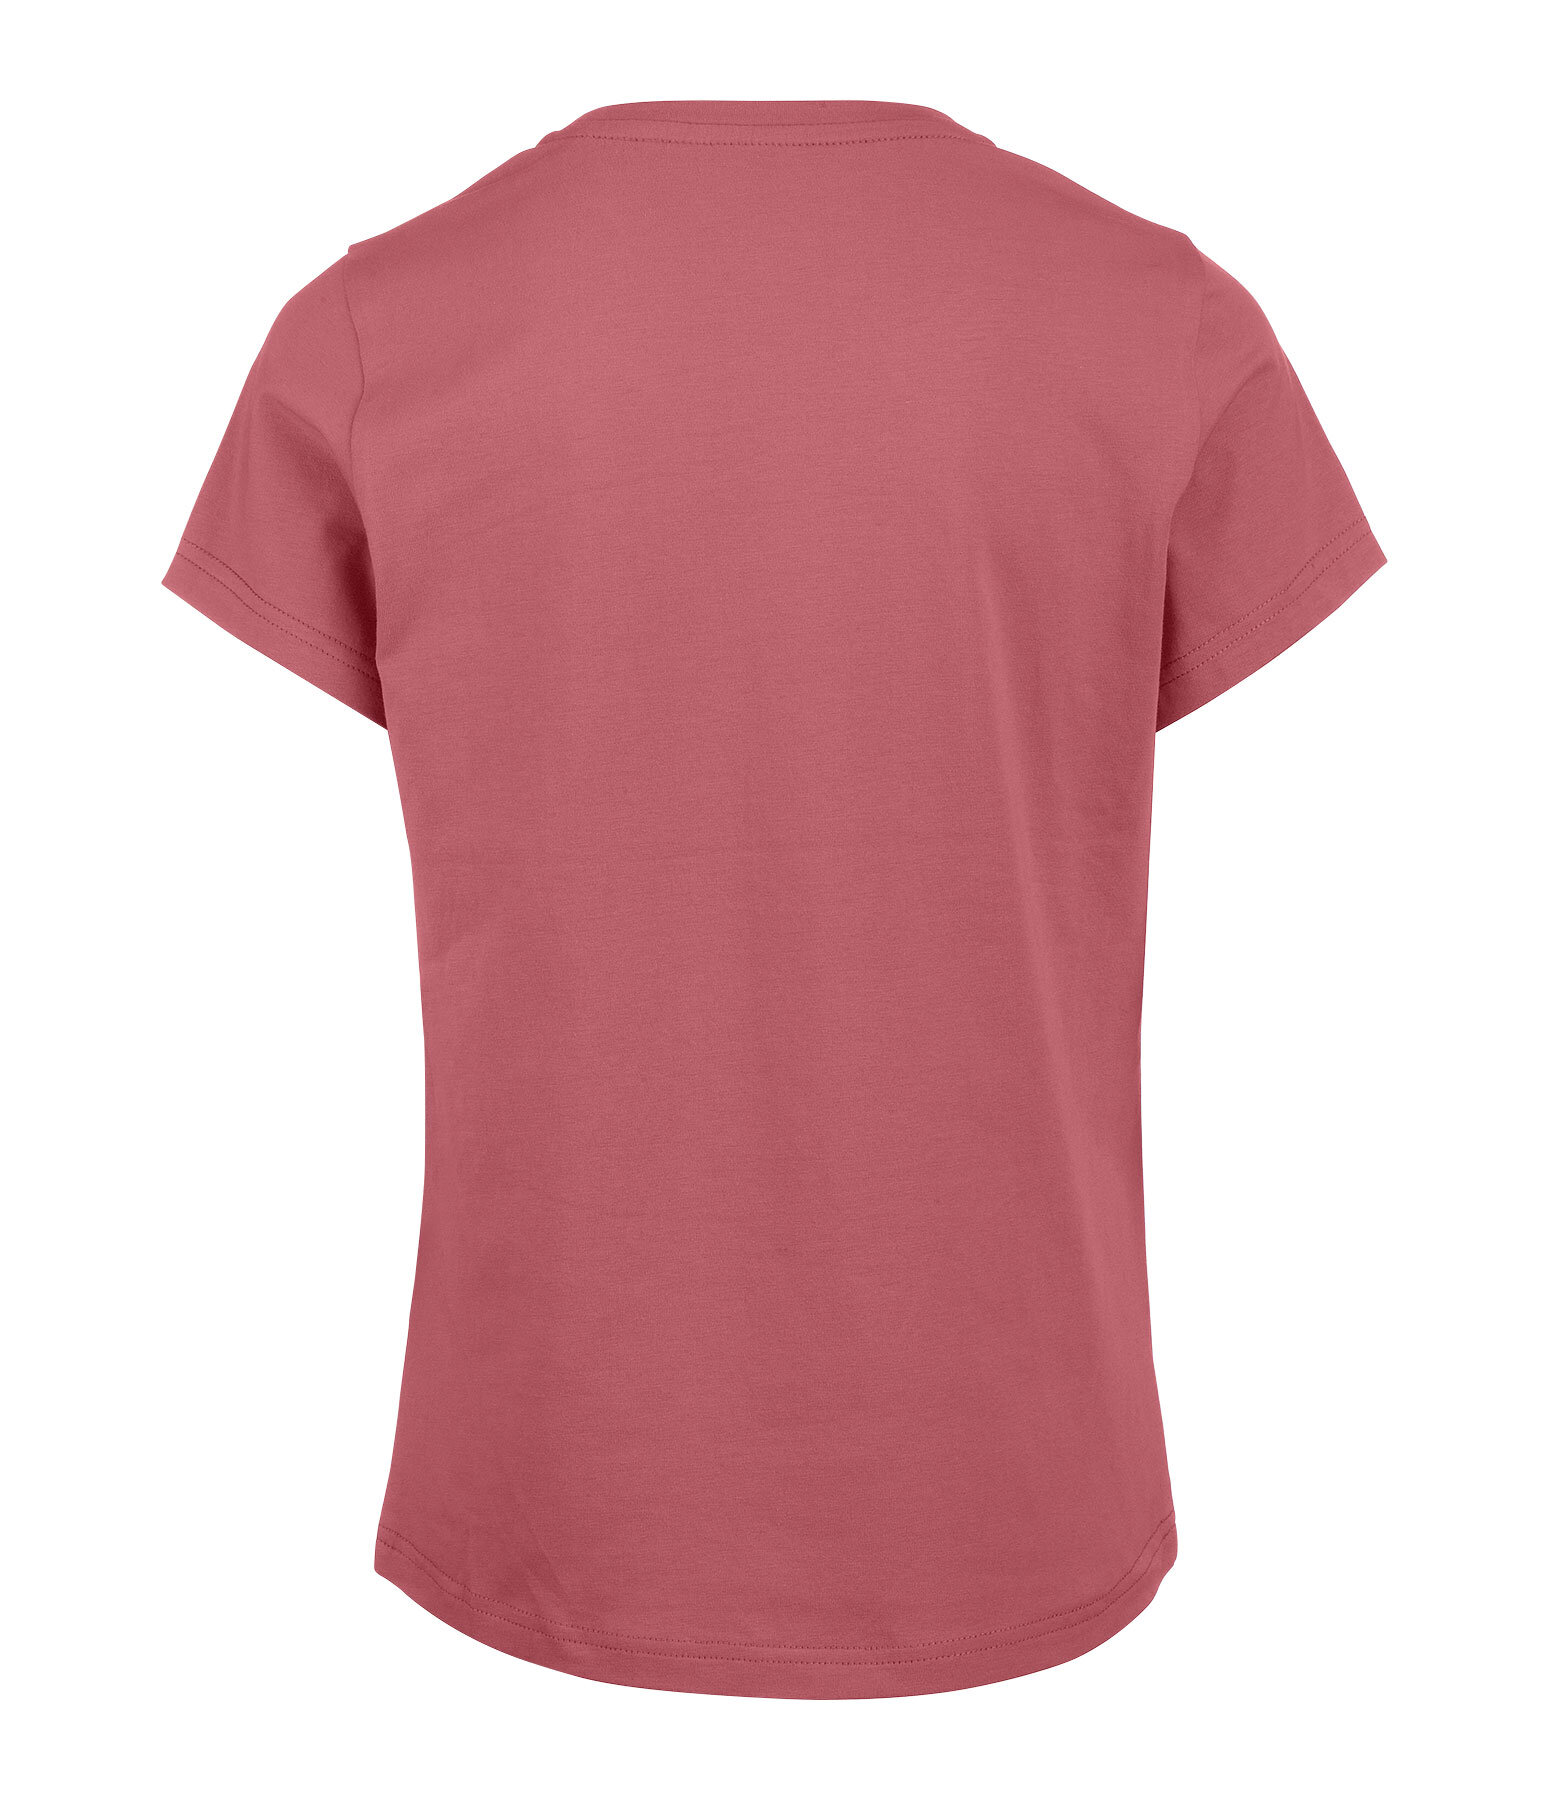 Children's Reversible Sequin T-Shirt Mala